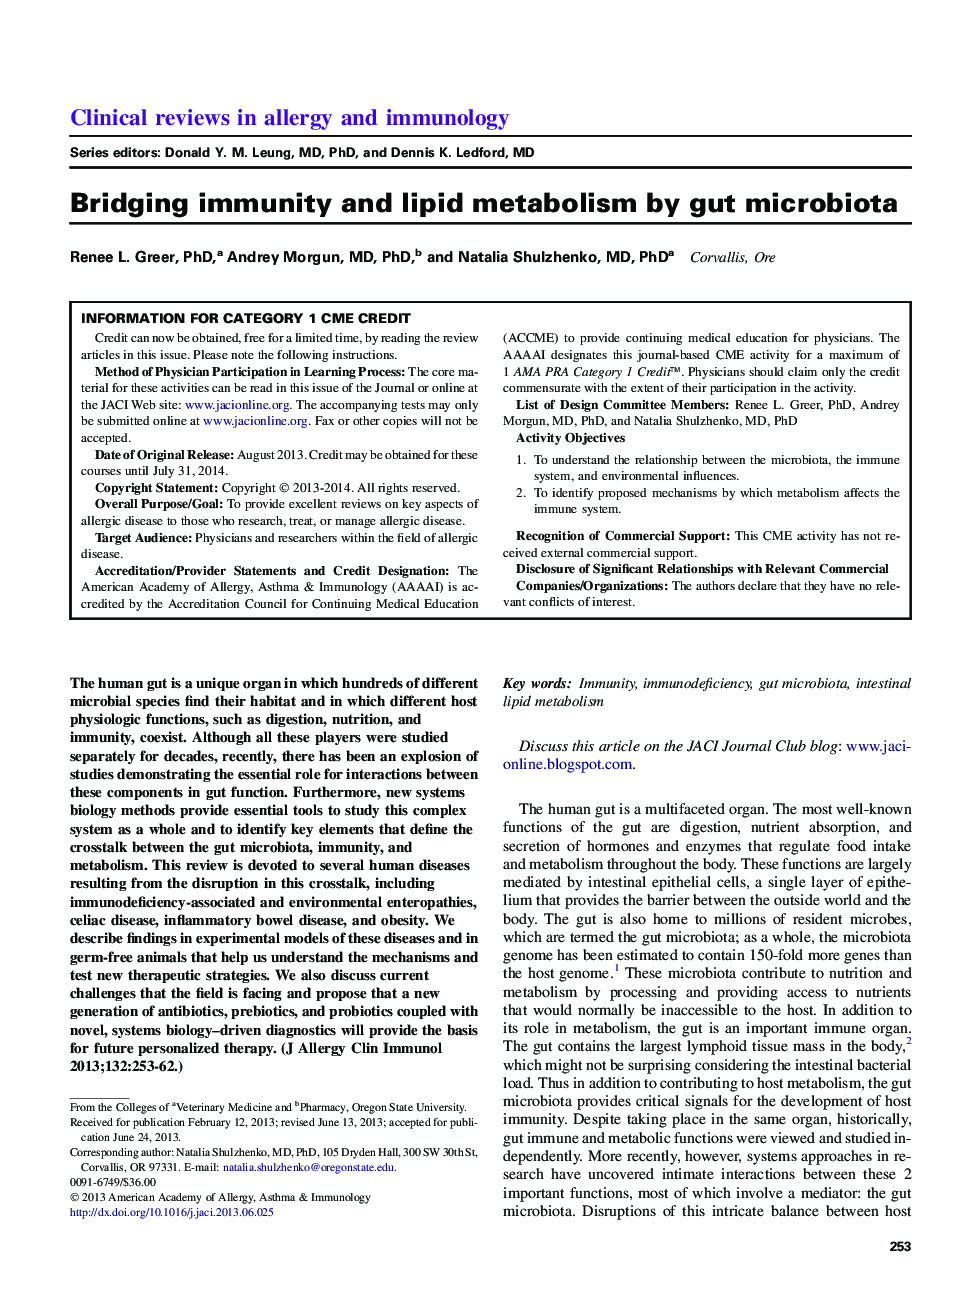 Bridging immunity and lipid metabolism by gut microbiota